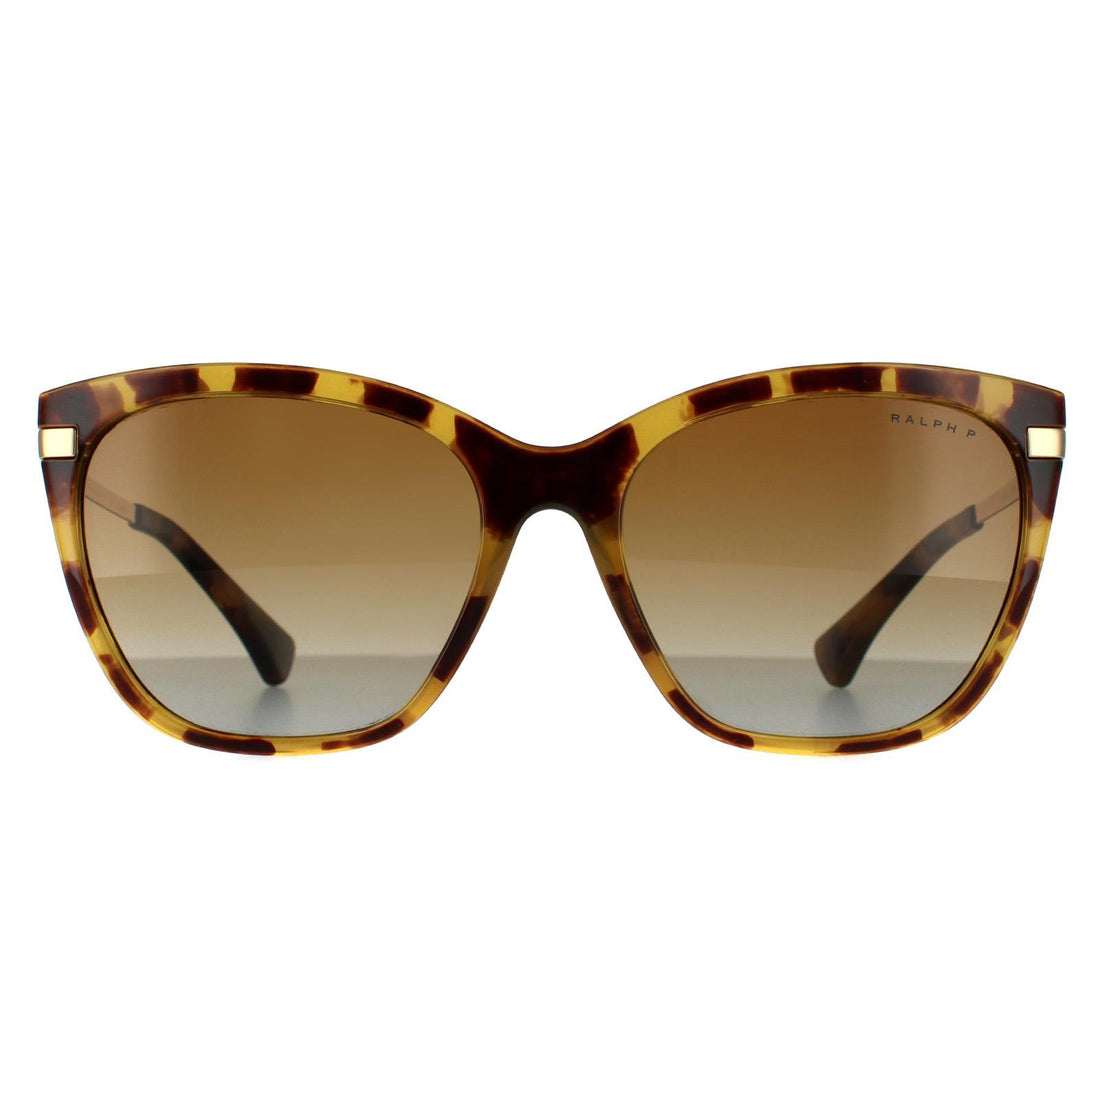 Ralph by Ralph Lauren RA5267 Sunglasses Shiny Sponged Havana Brown Gradient Polarized